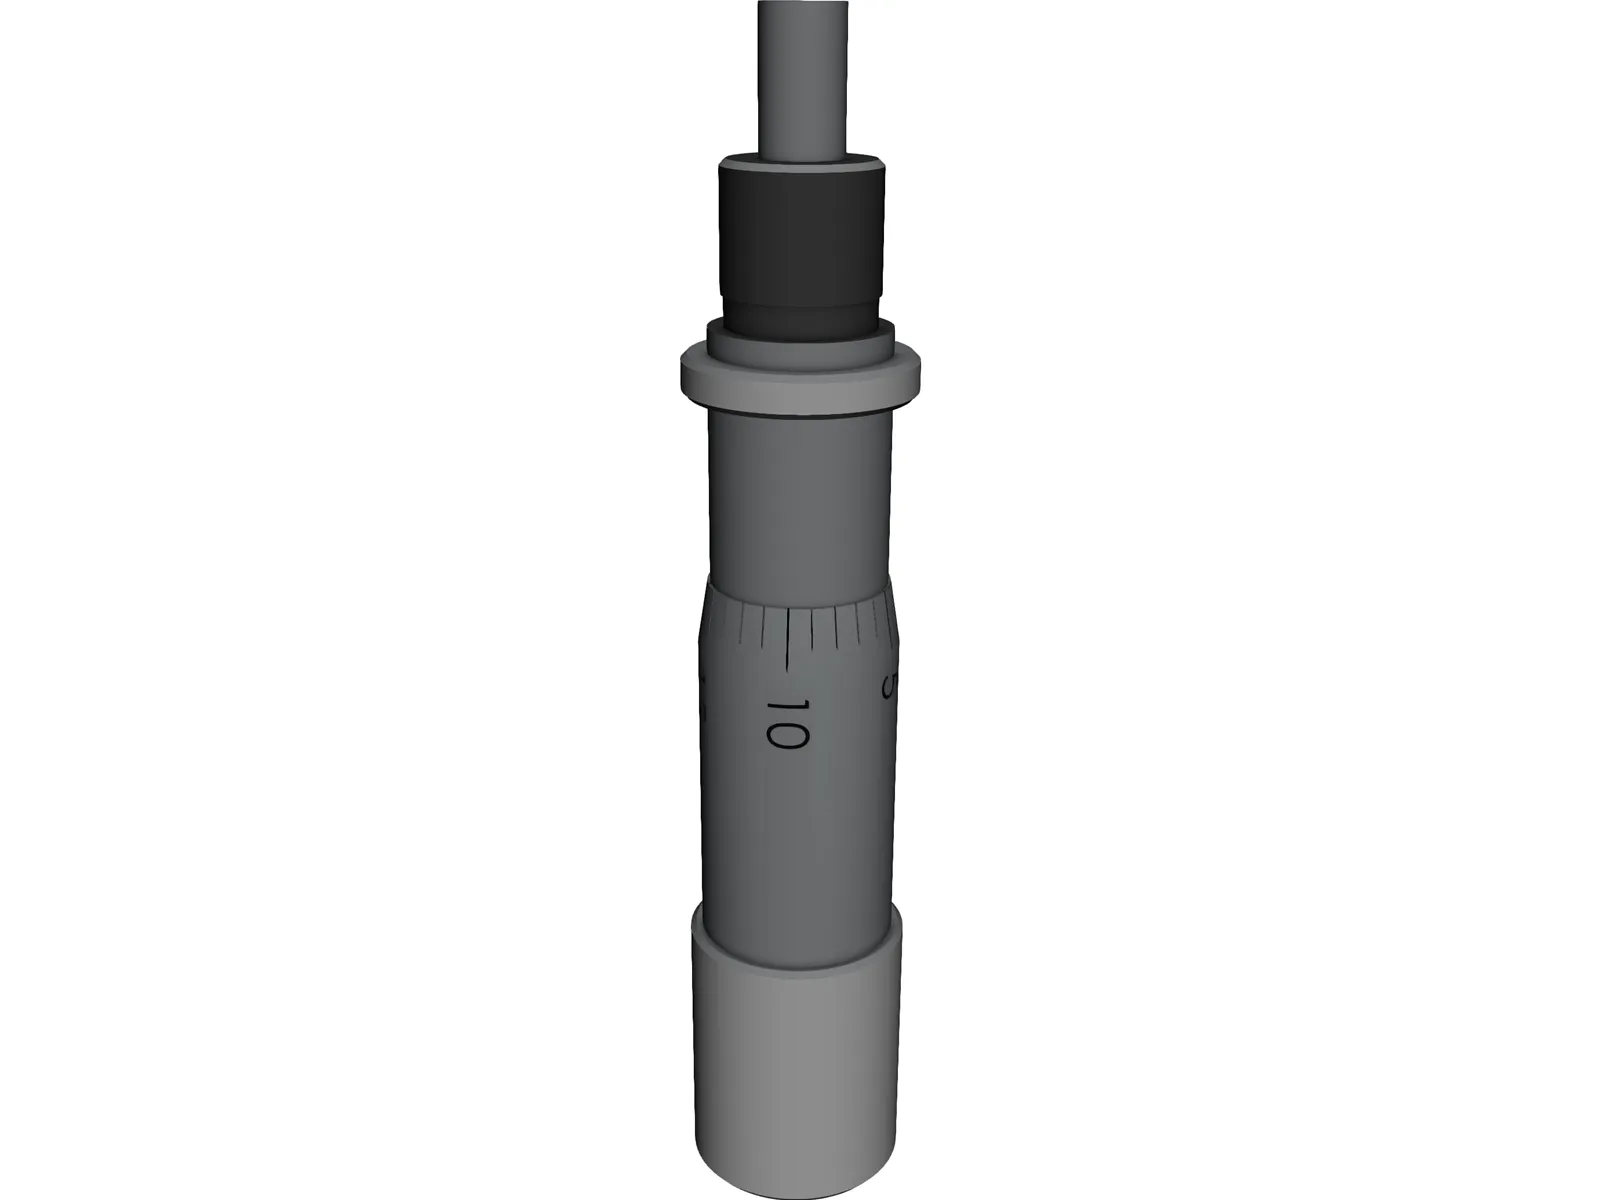 Mitutoyo 148-111 Micrometer Head 3D Model